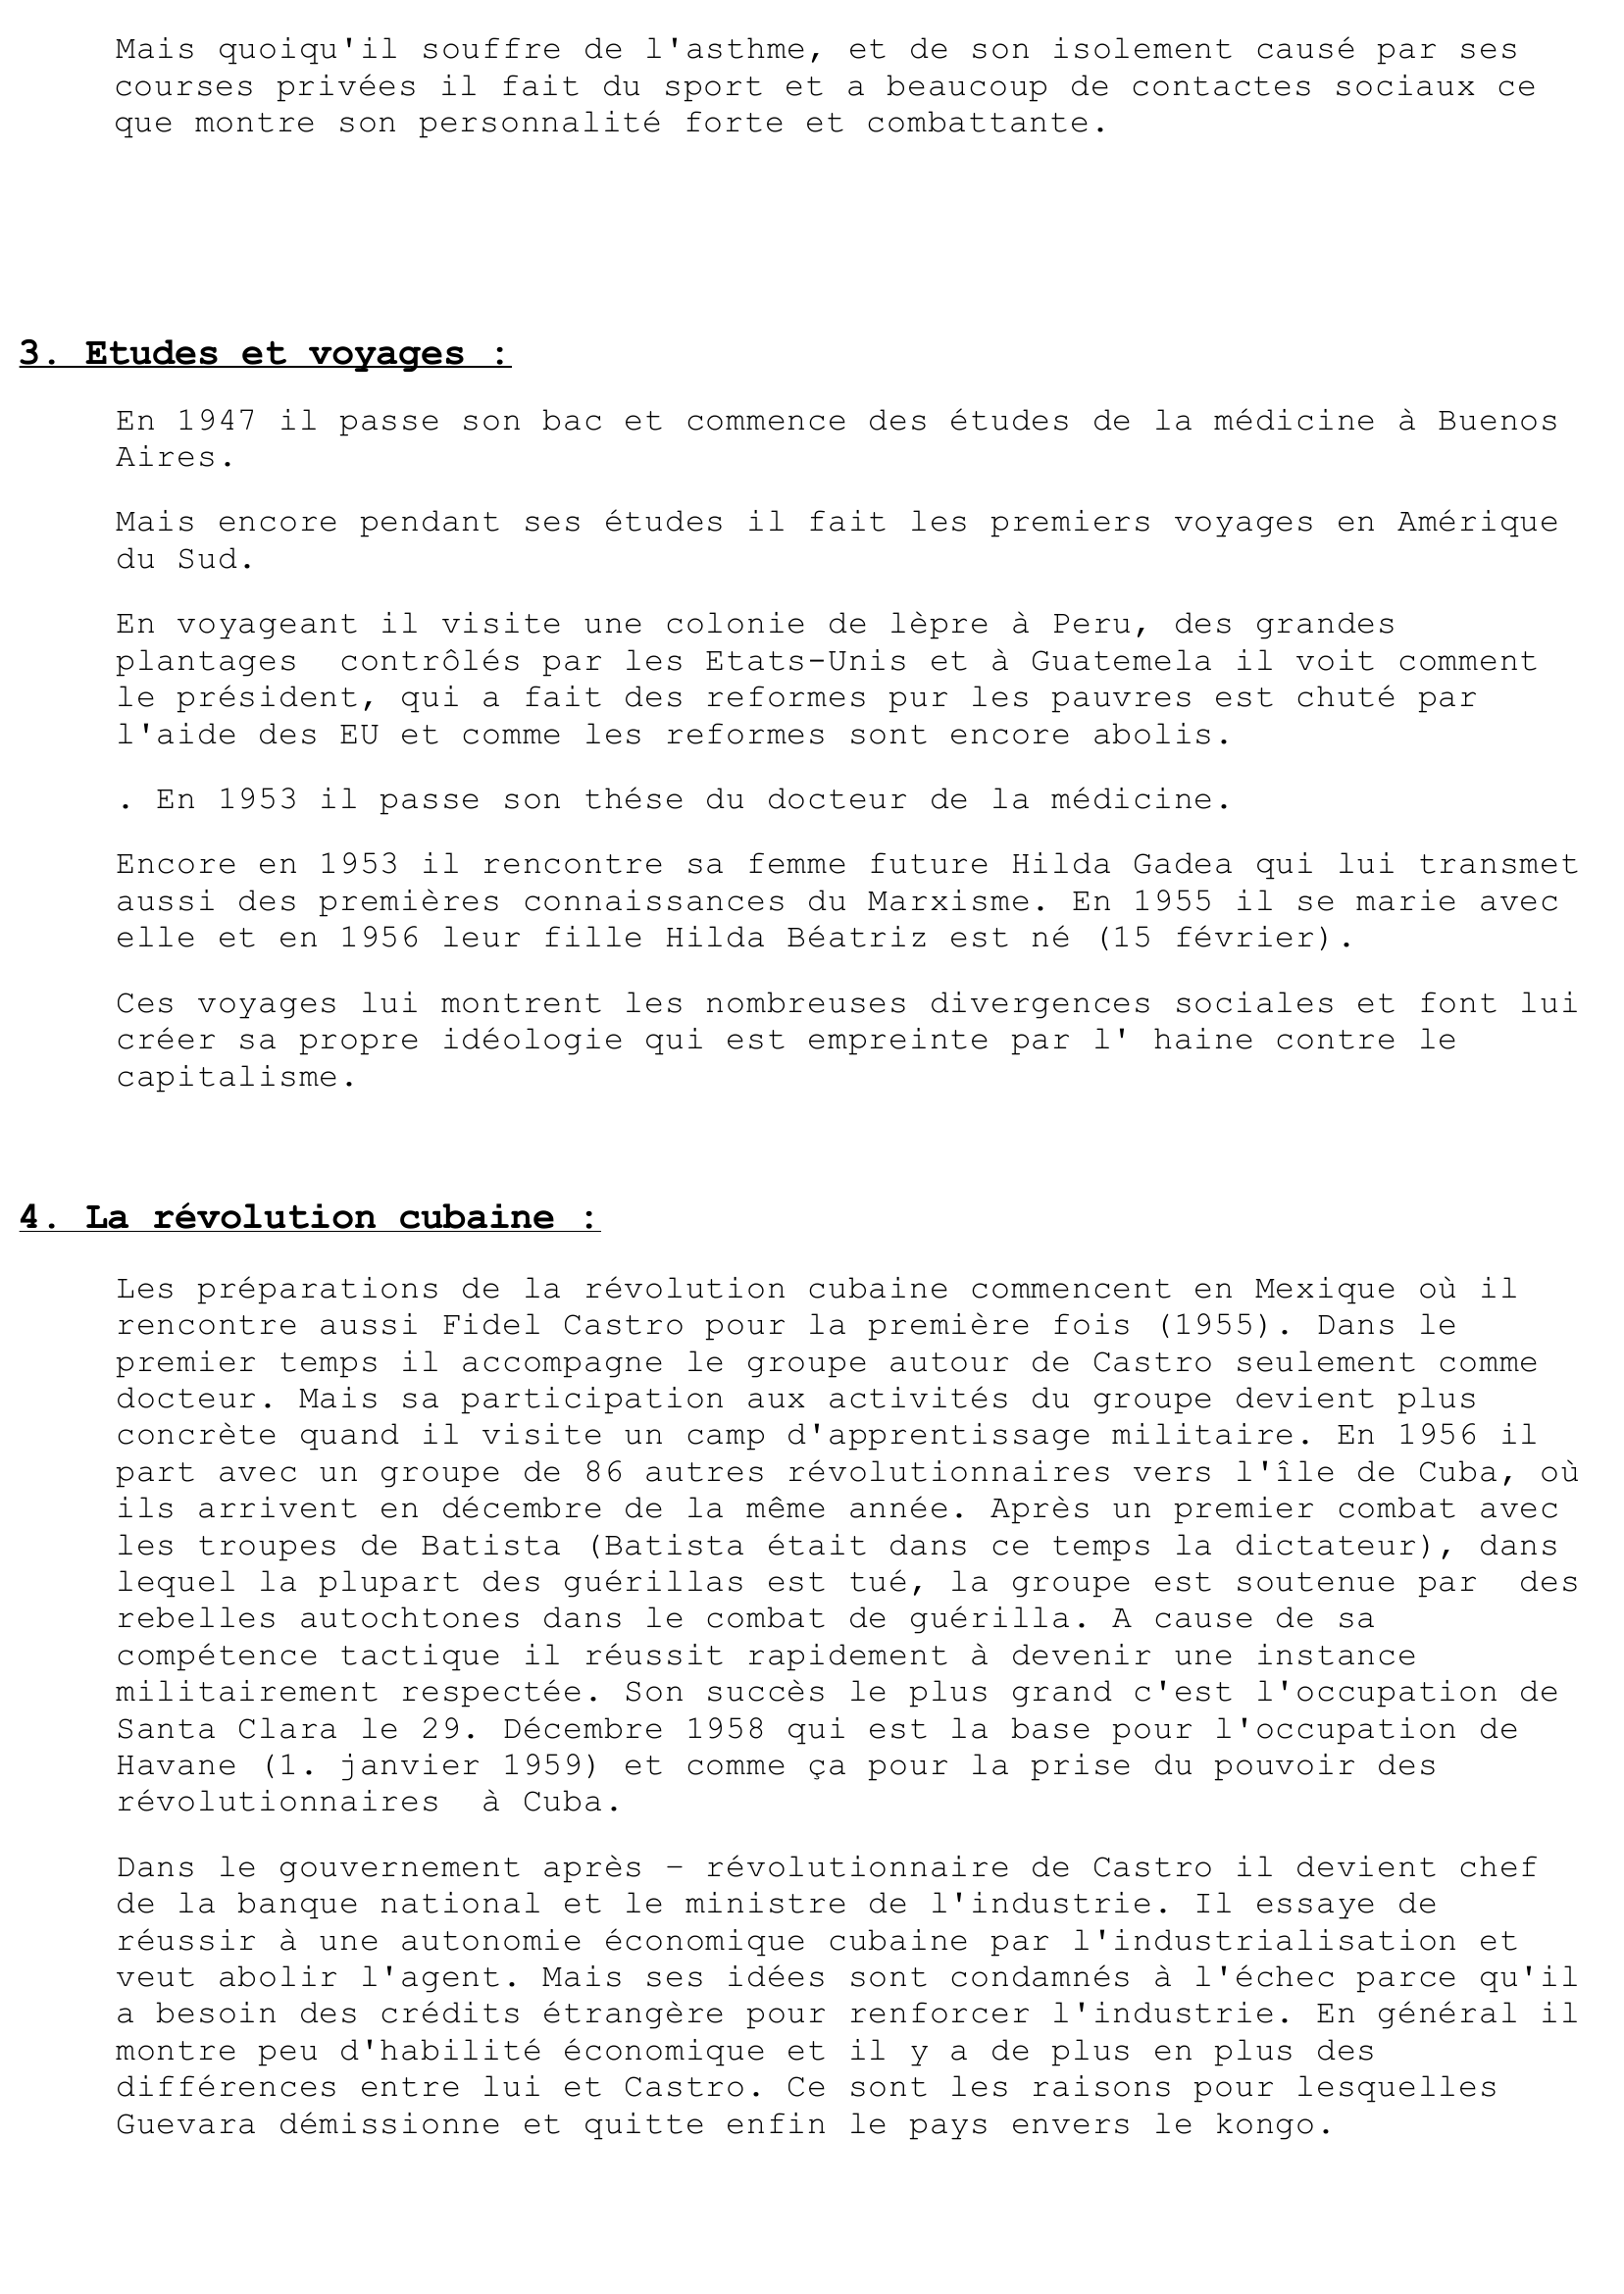 Prévisualisation du document Che Guevara